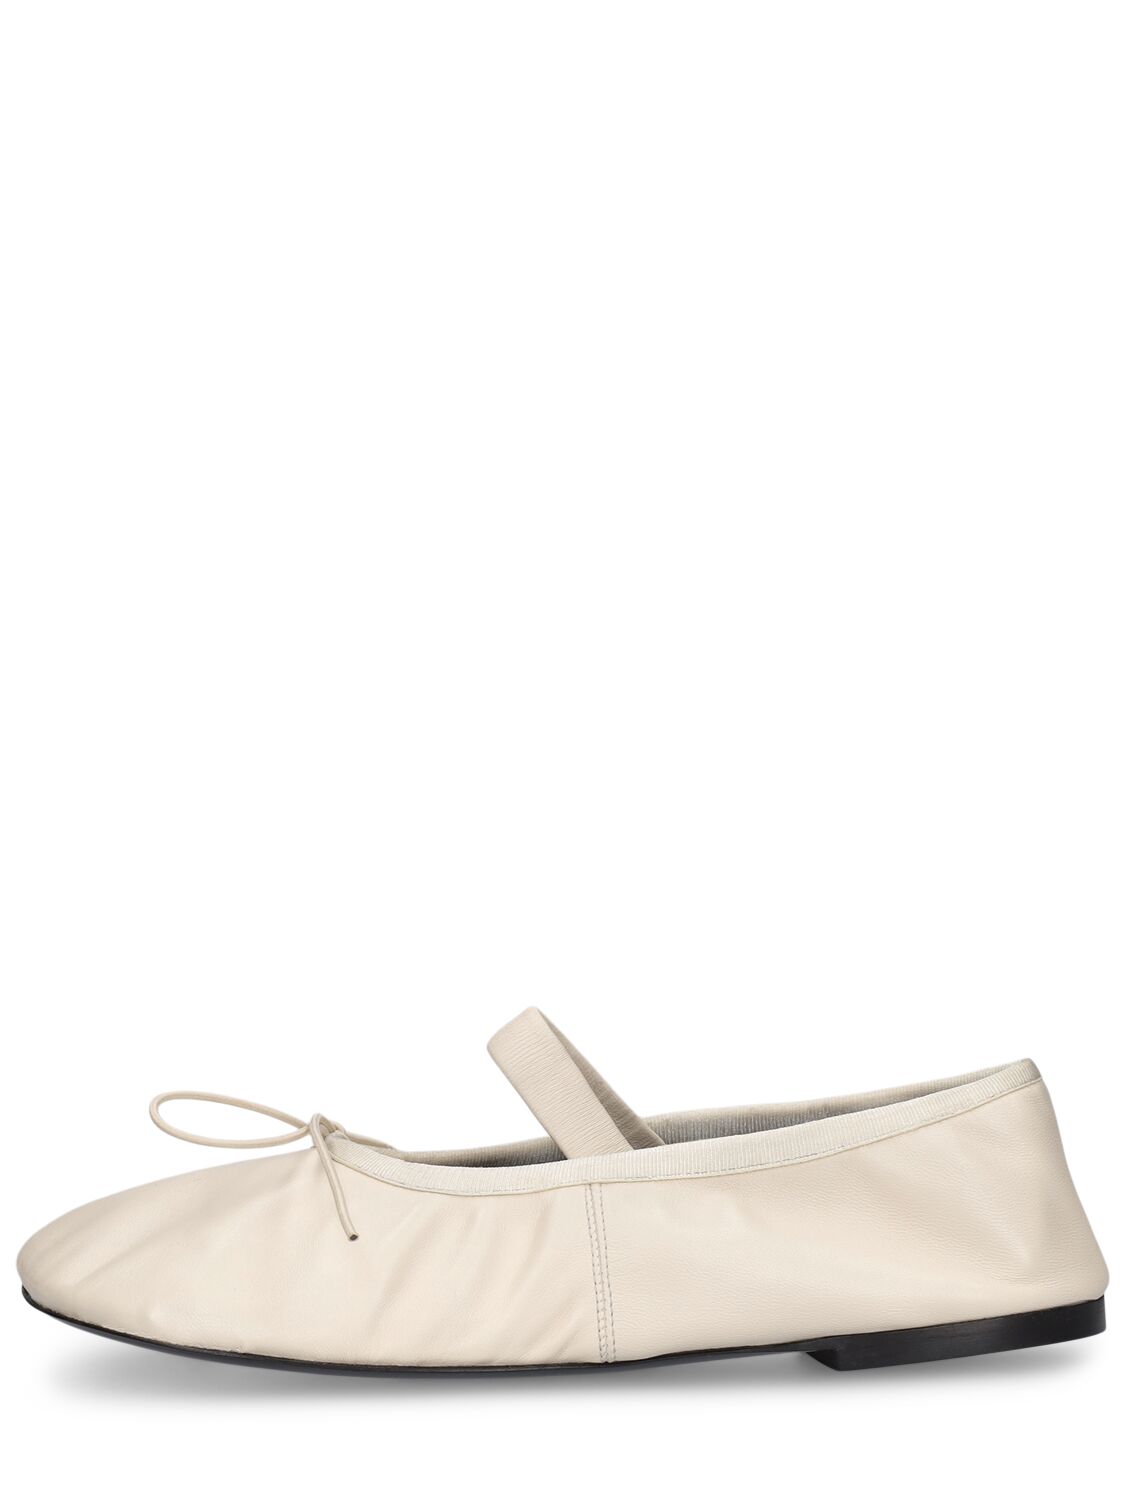 Proenza Schouler 10mm Glove Leather Mary Jane Flats In Cream